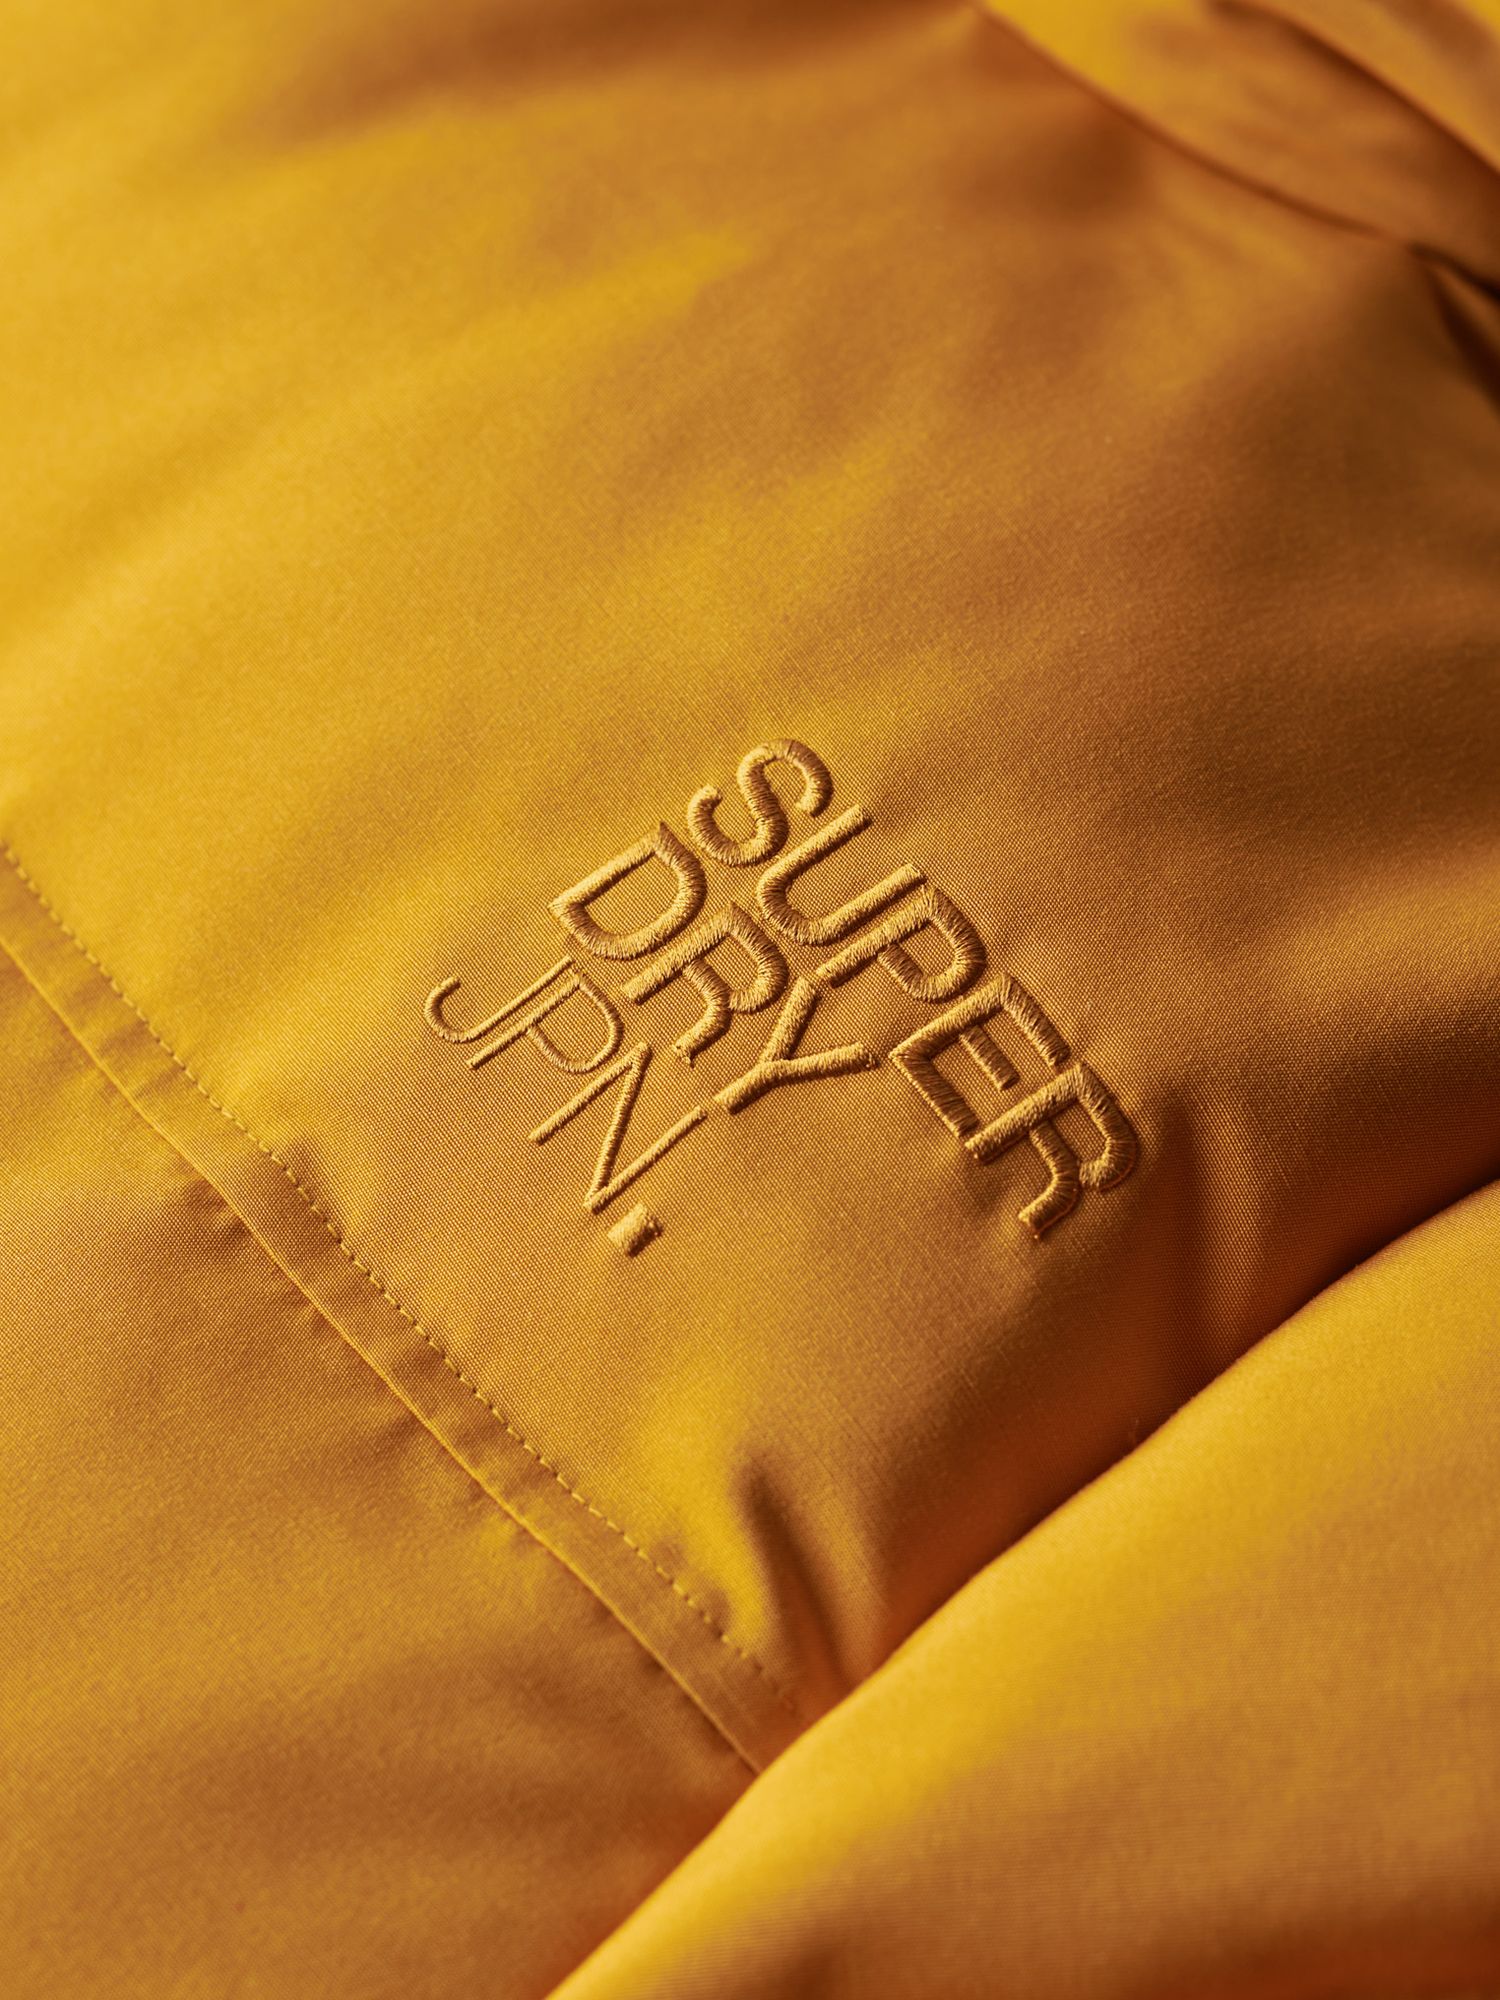 Superdry Everest Hooded Puffer Jacket, Mustard, S